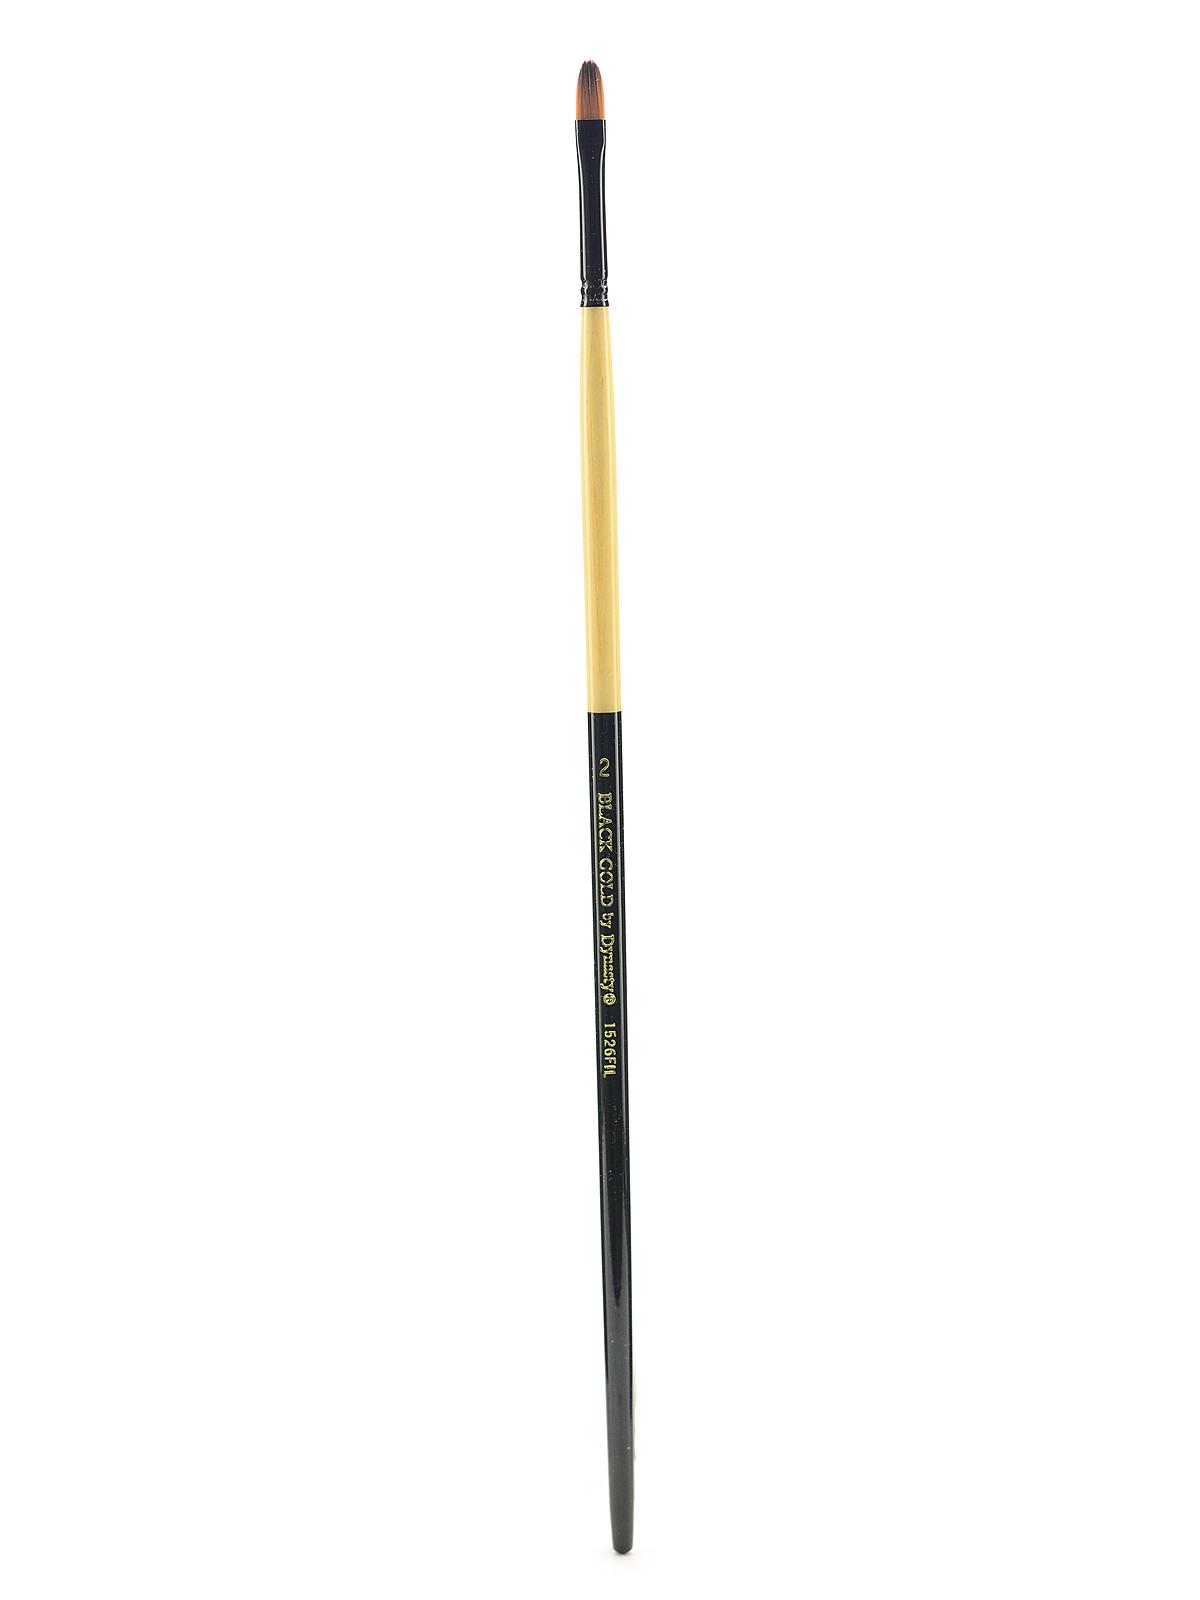 Black Gold Series Long Handled Synthetic Brushes 2 Filbert 1526FIL